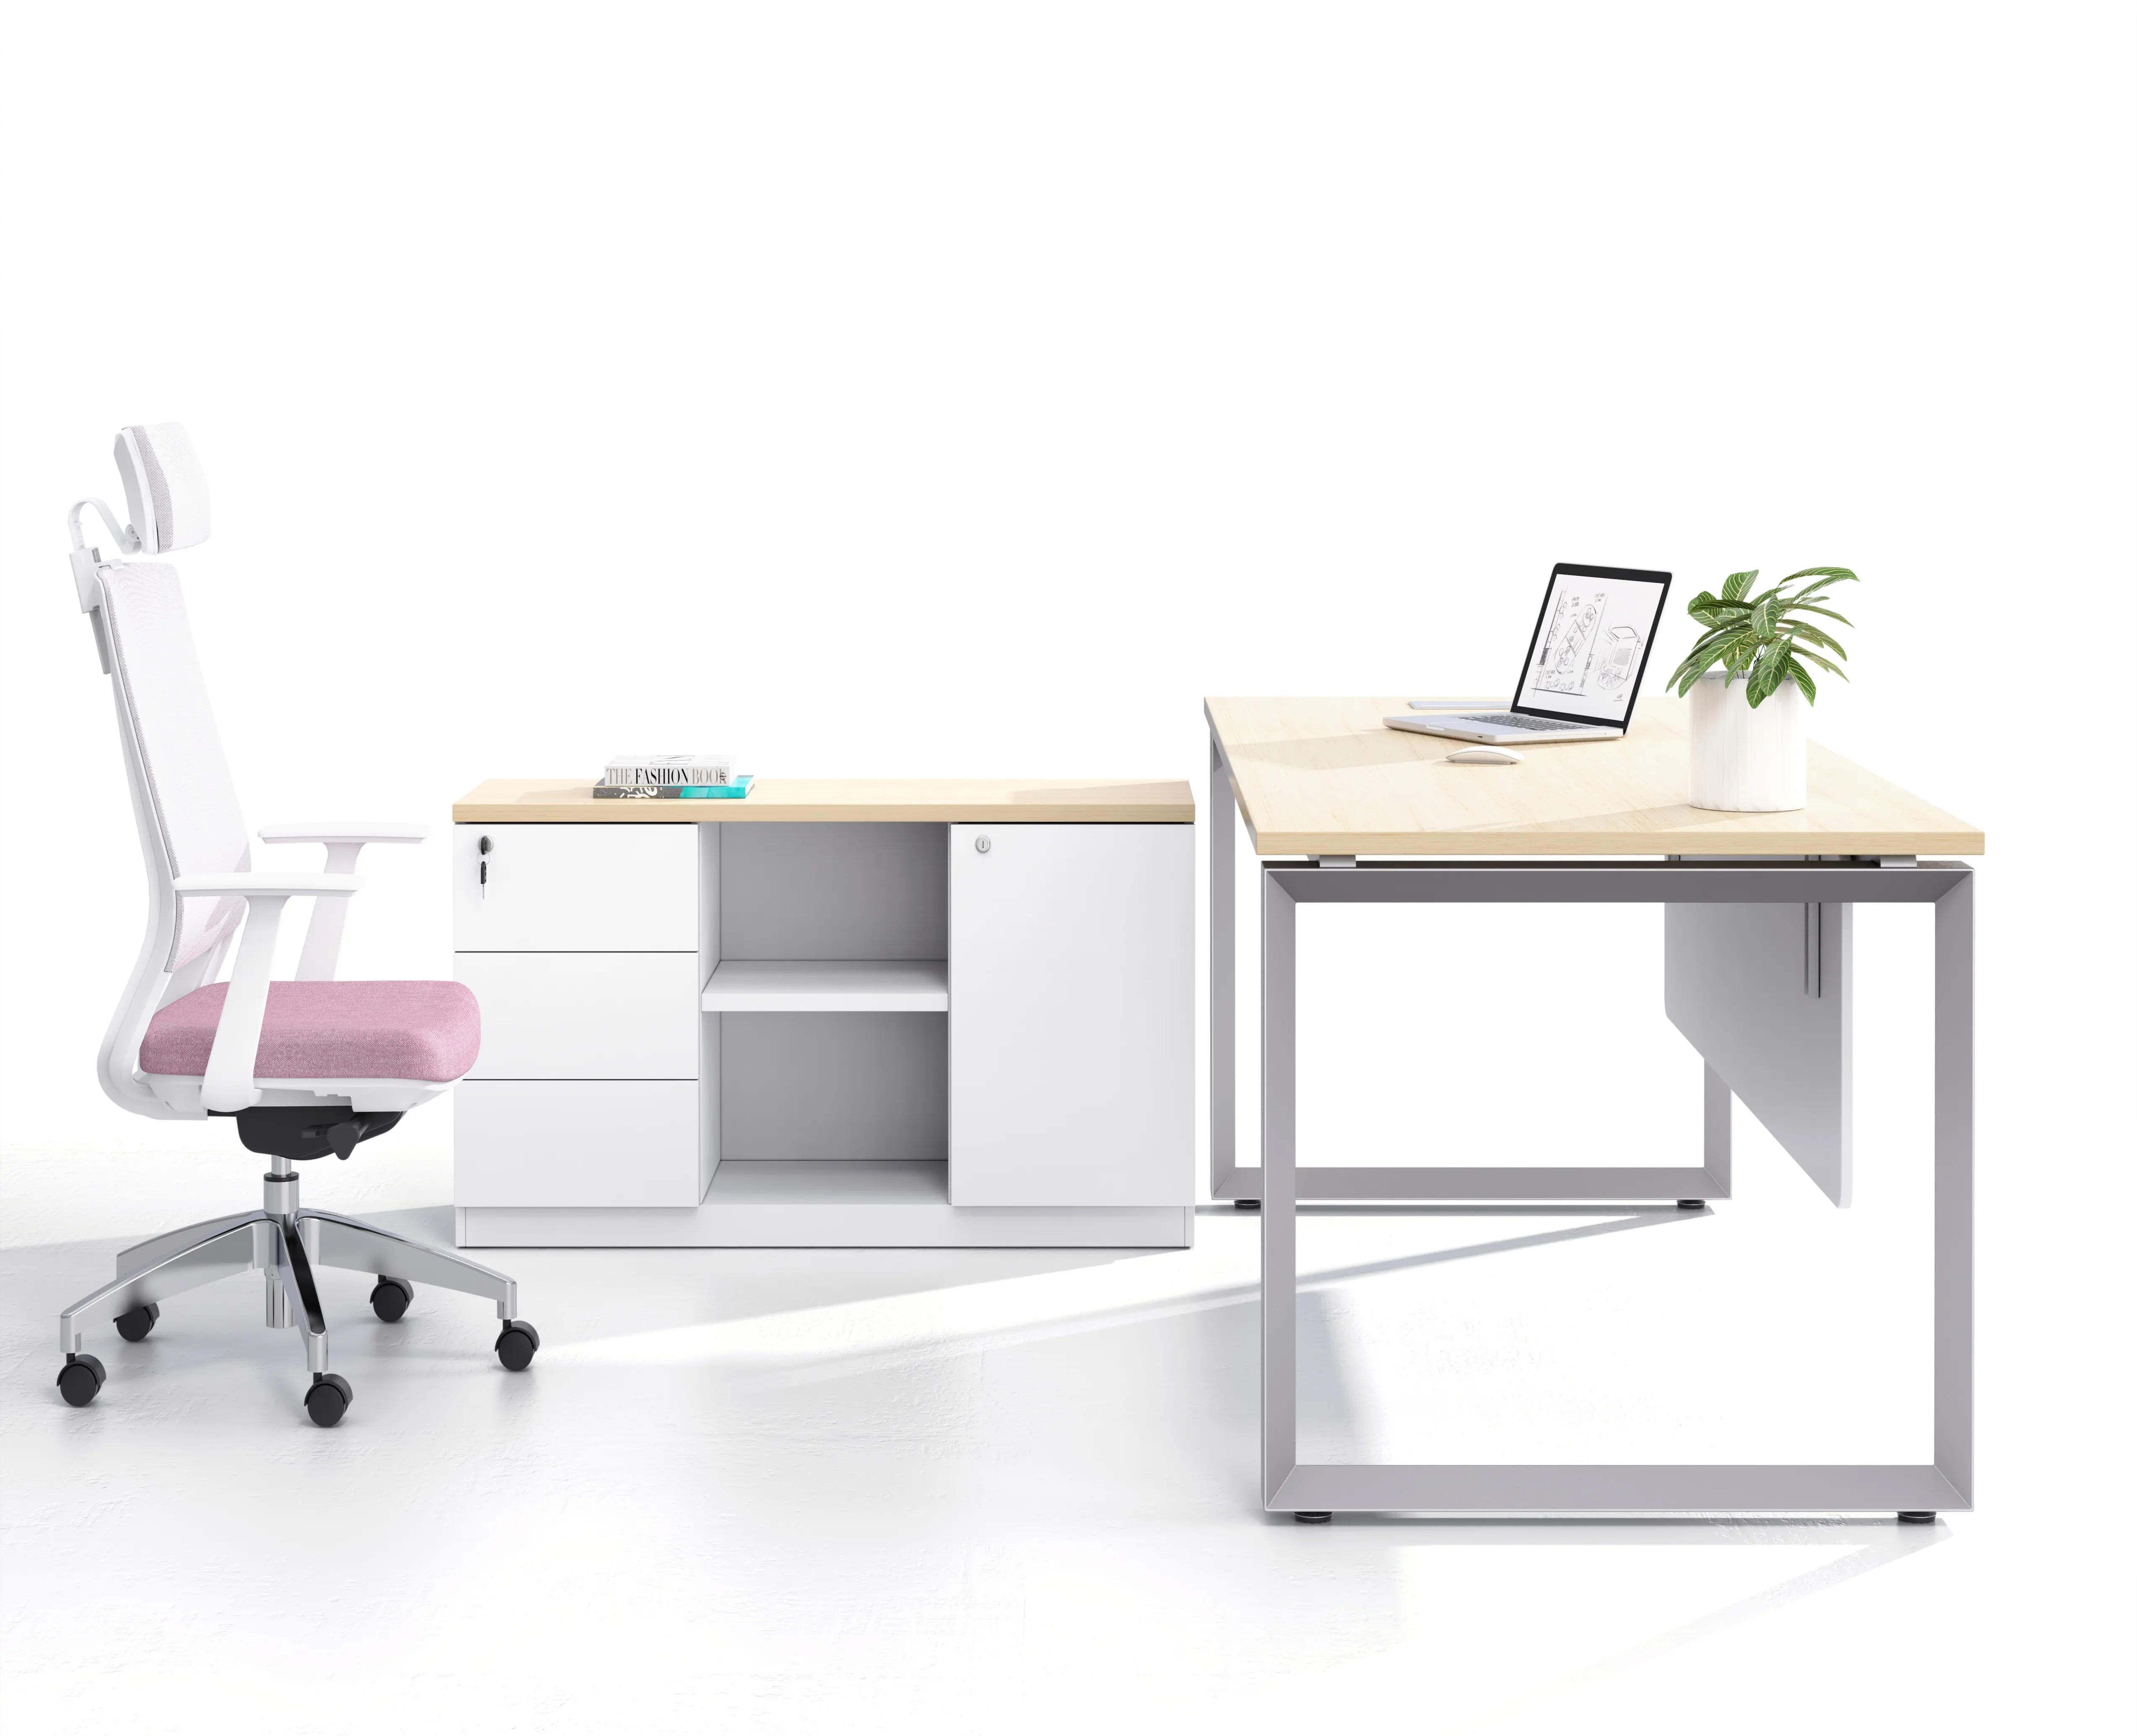 Hot sell Ceo Luxury Modern Design Boss Office Furniture Set Manager Desk Table L Shaped White Executive Desk frame leg